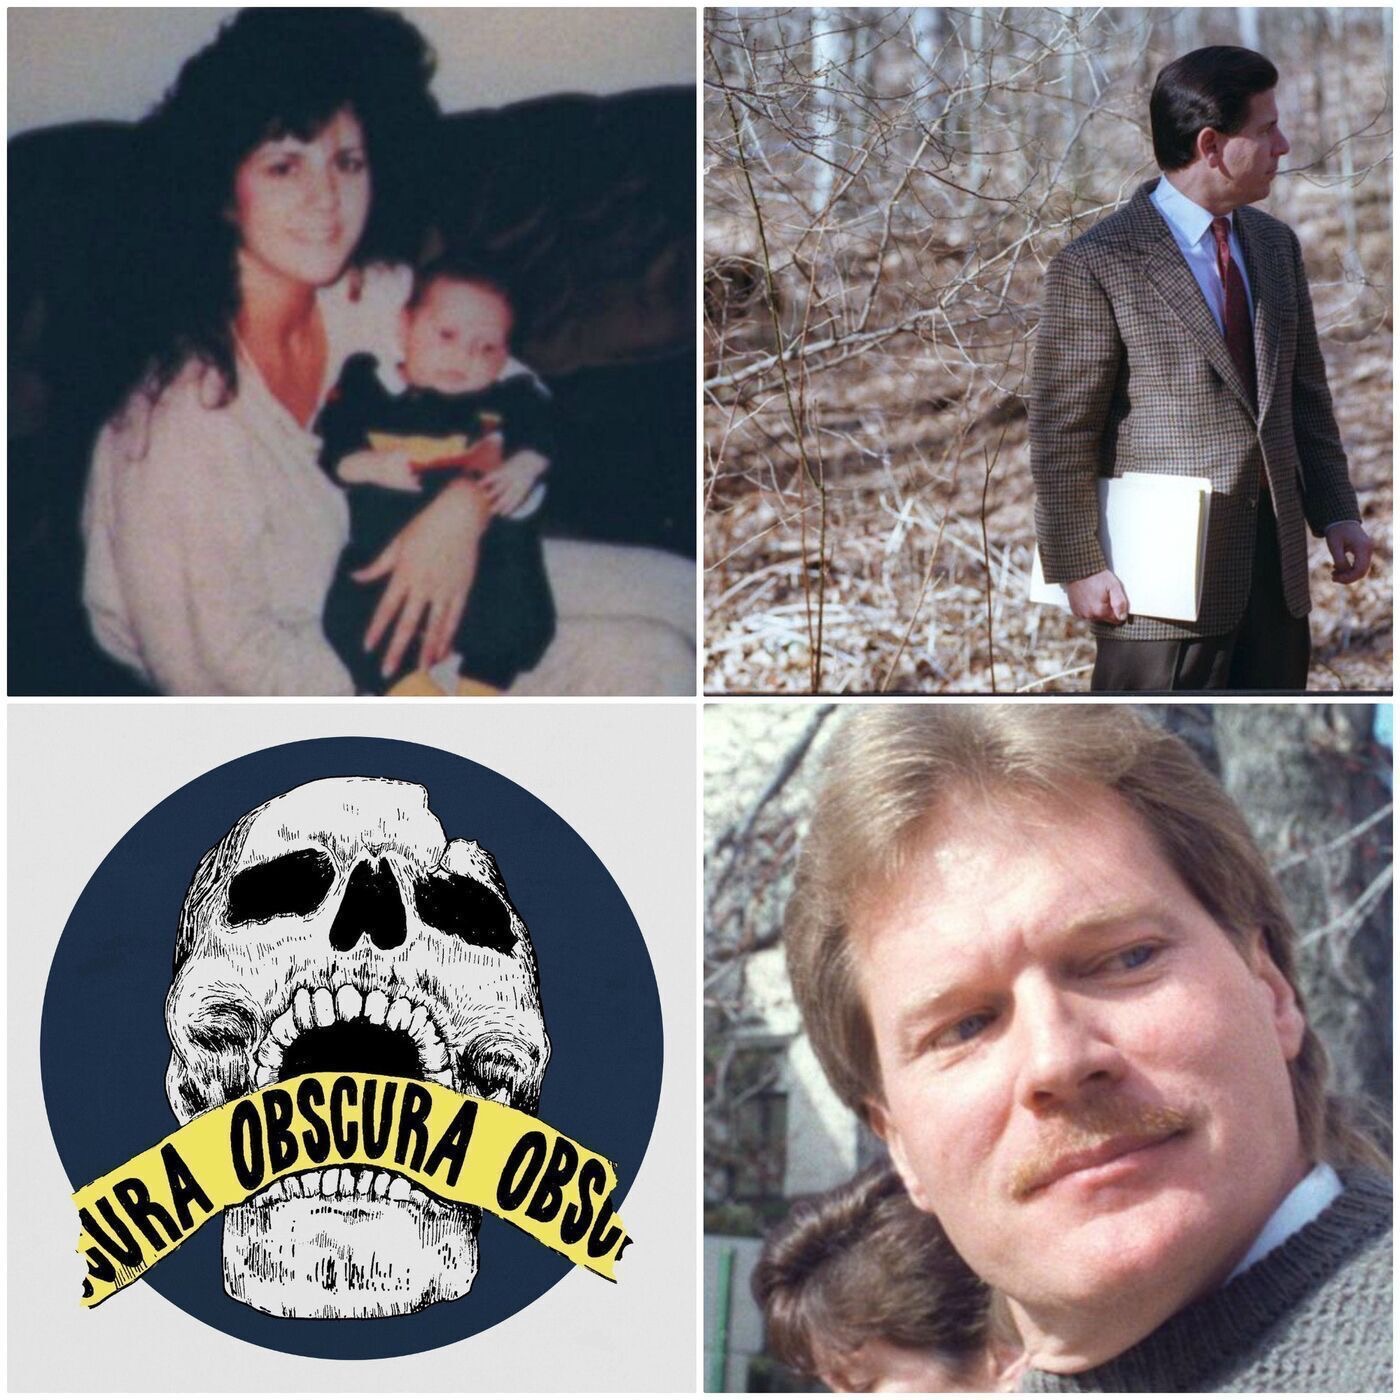 9: The Murders of Joann and Alex Katrinak, Part 02